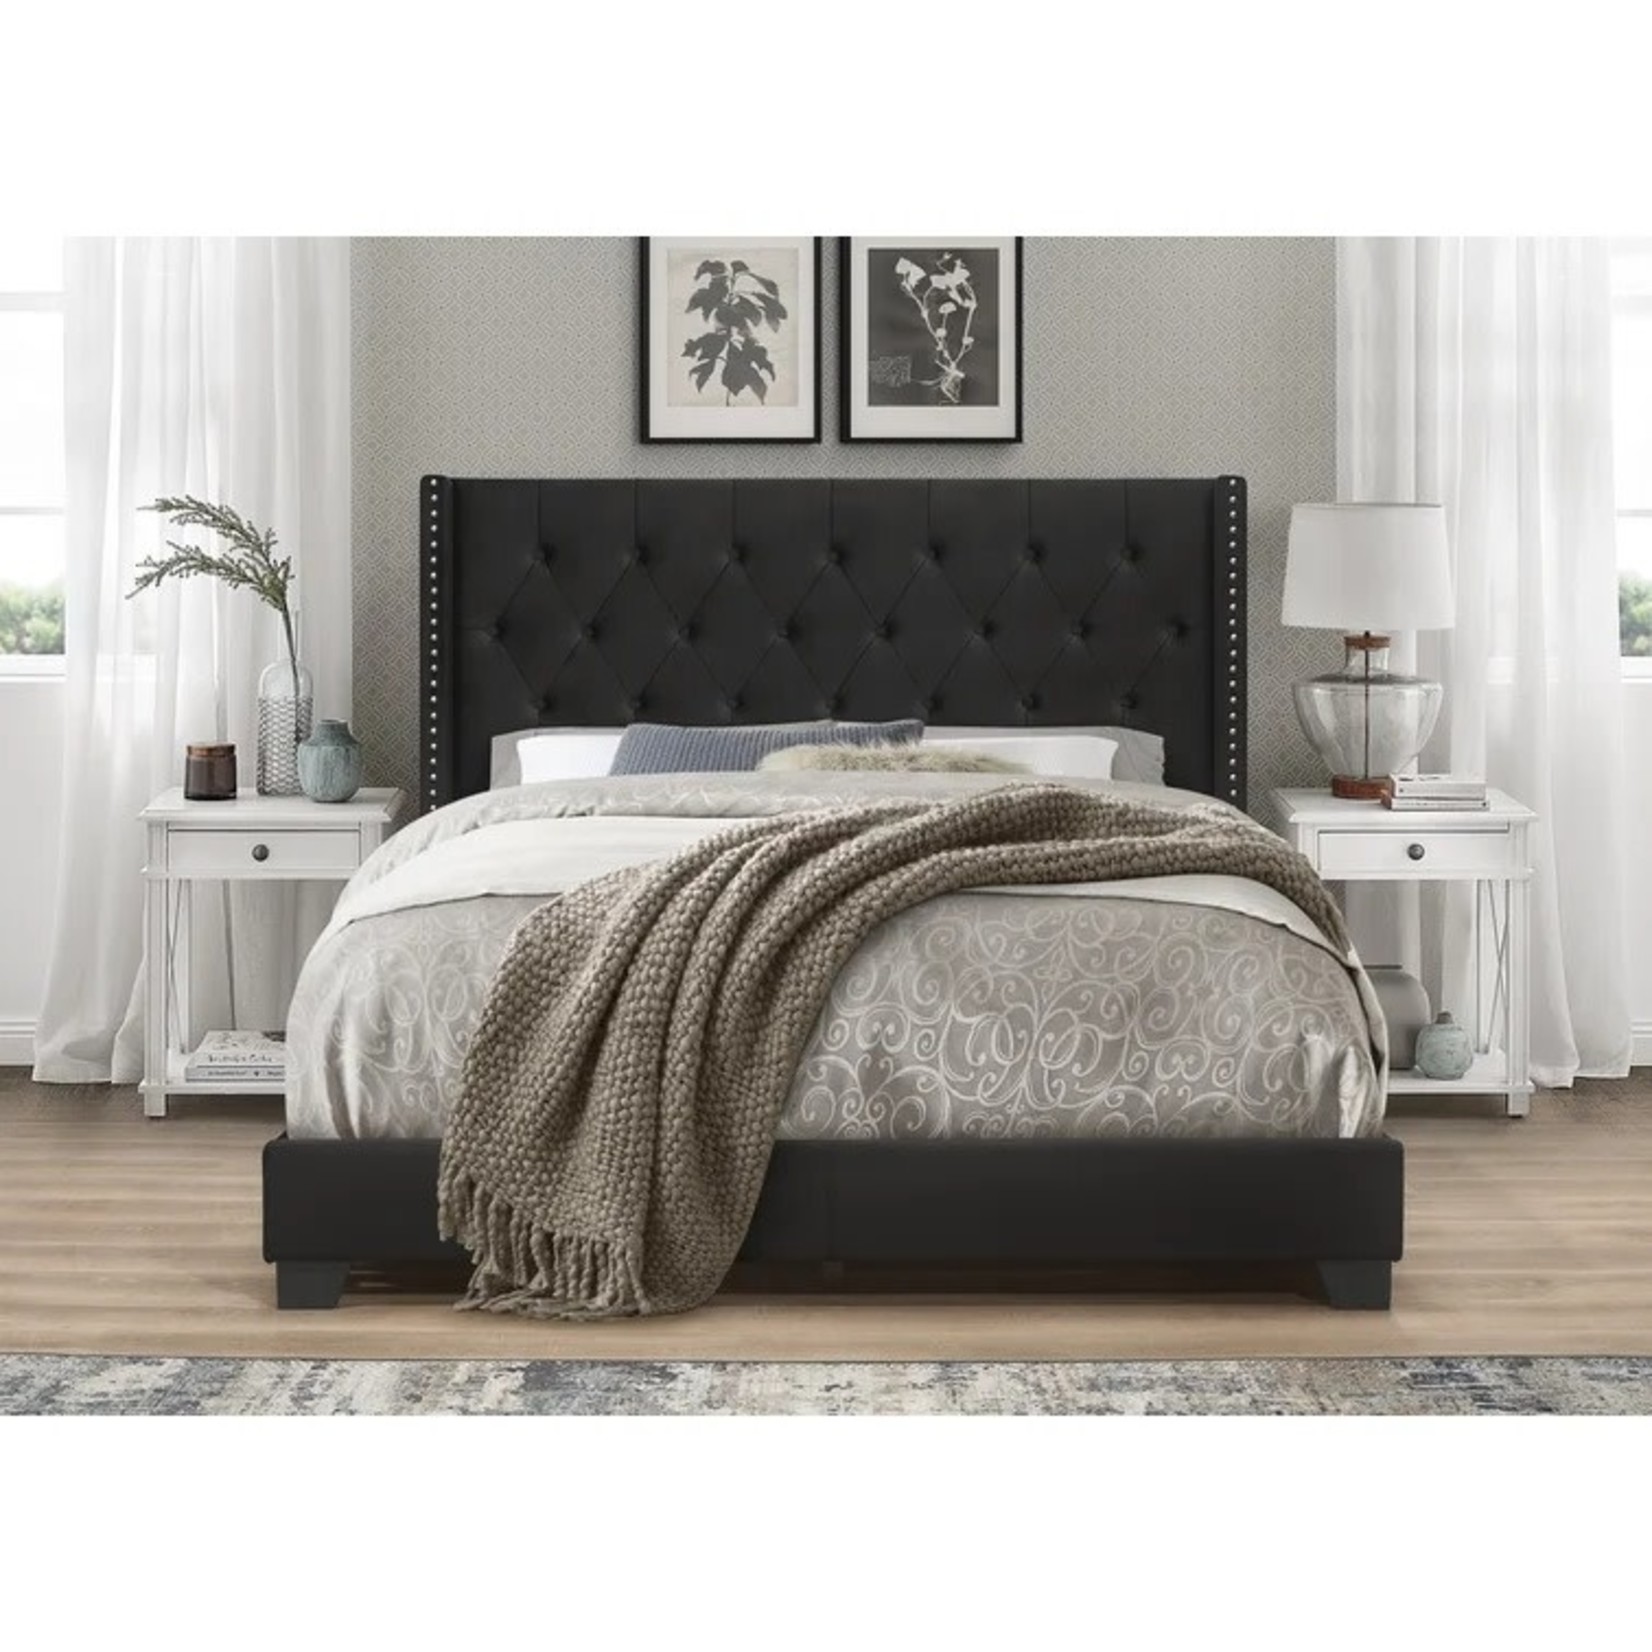 *Queen Sanders Upholstered Low Profile Standard Bed - Black